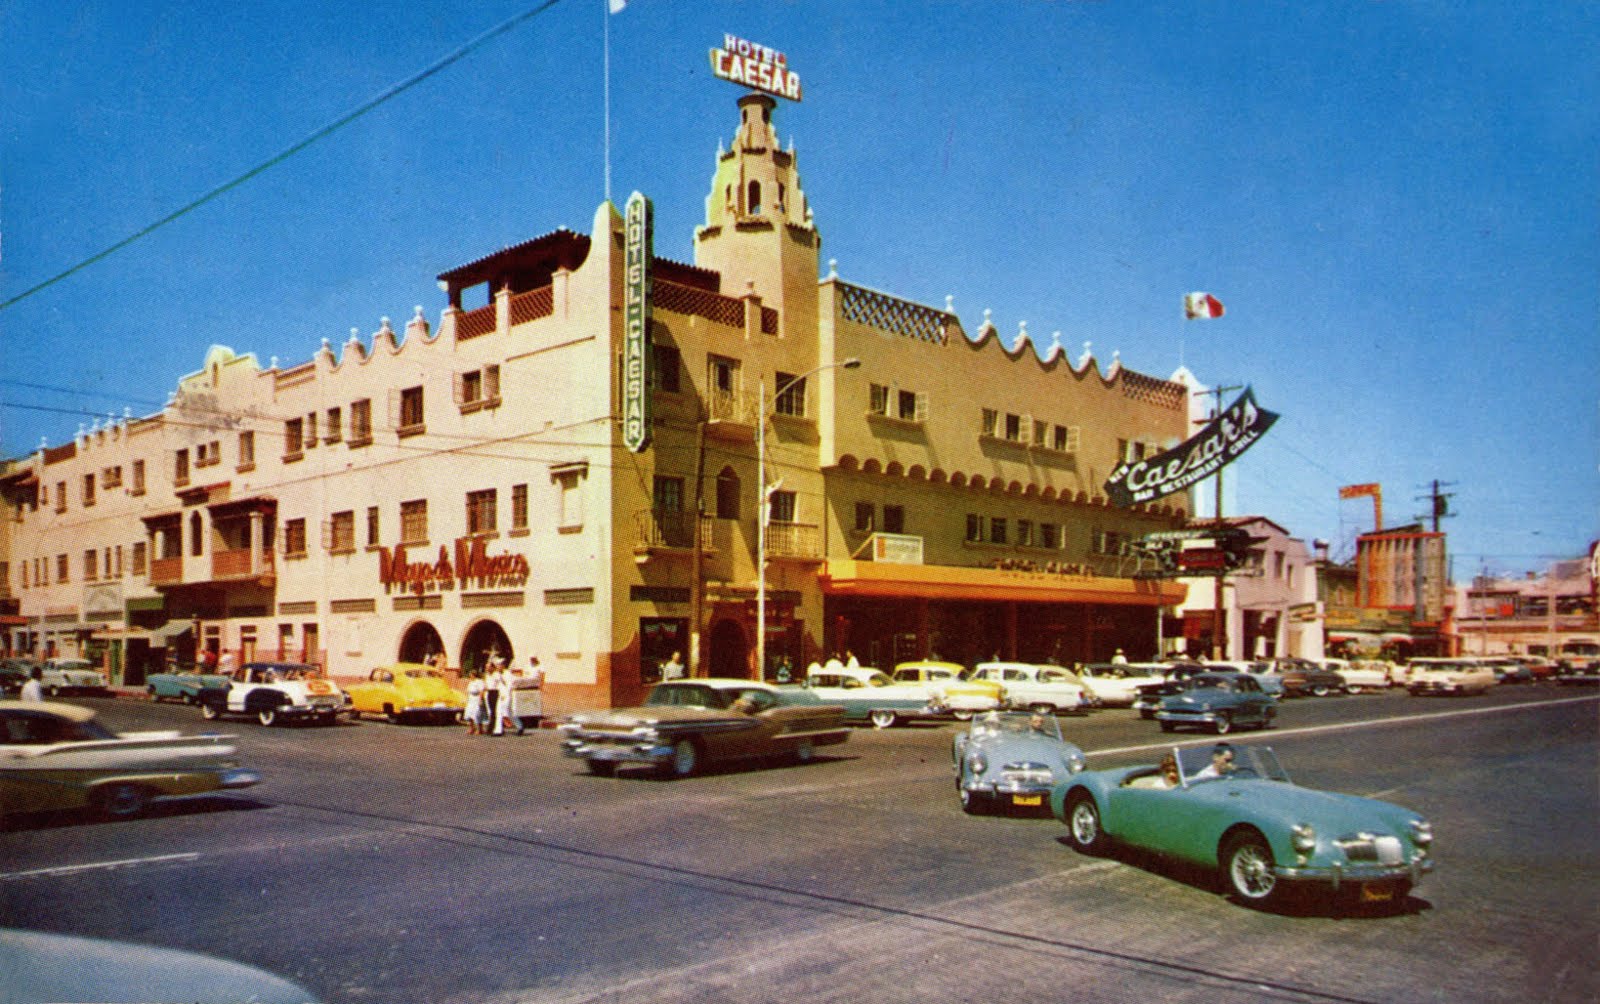 Hotel Caesar, 1950s postcard